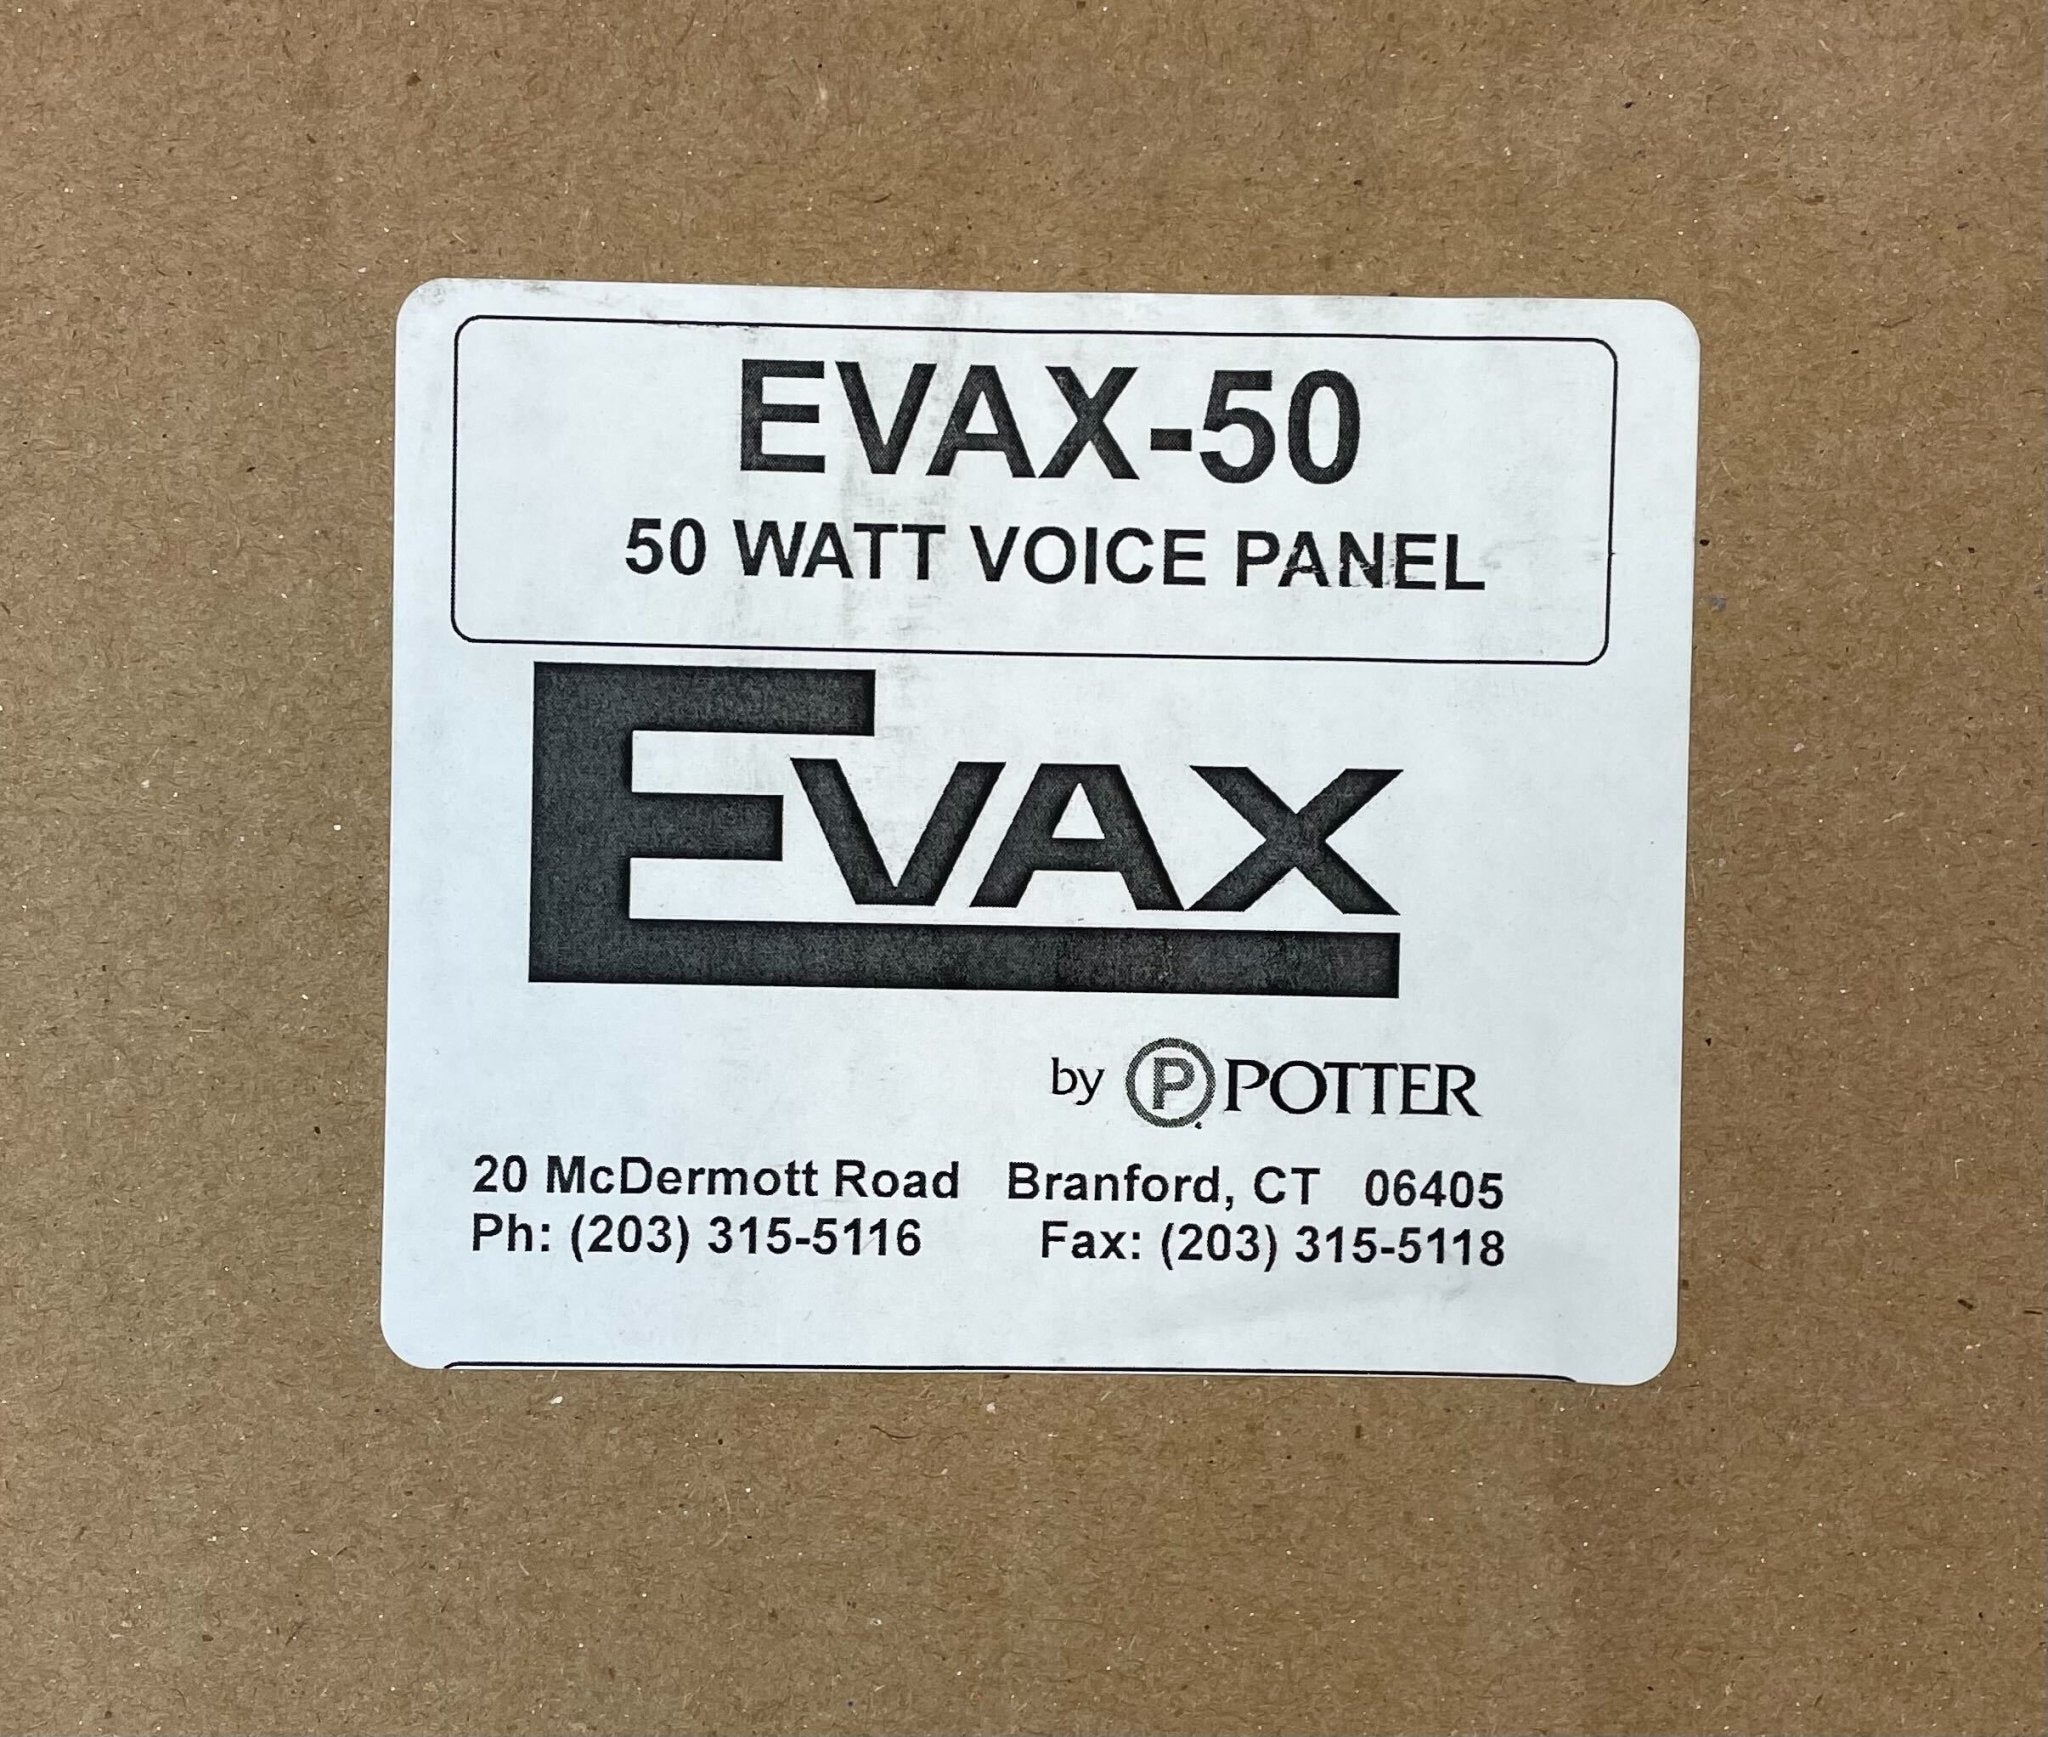 Potter EVAX-50 - The Fire Alarm Supplier